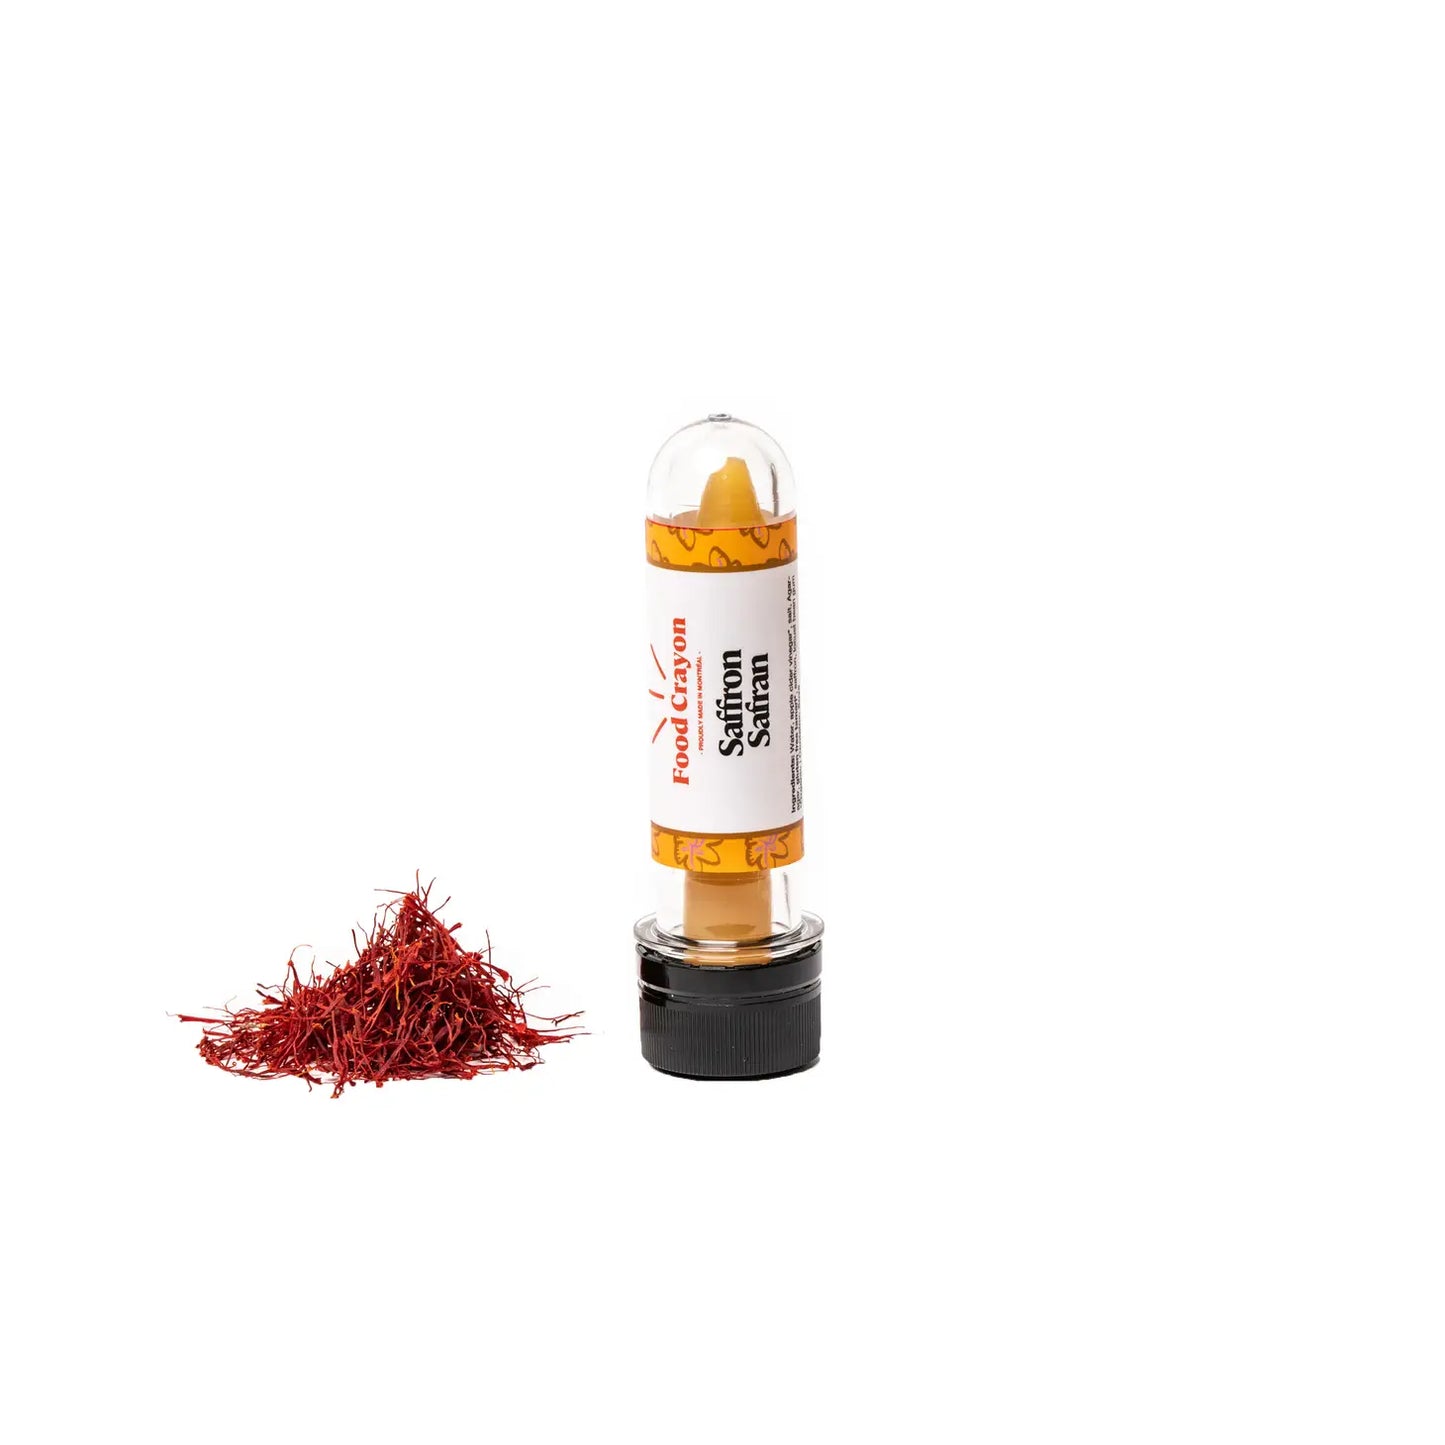 Food Crayon - Saffron - Single Box (1 Food Crayon + 1 Sharpener)